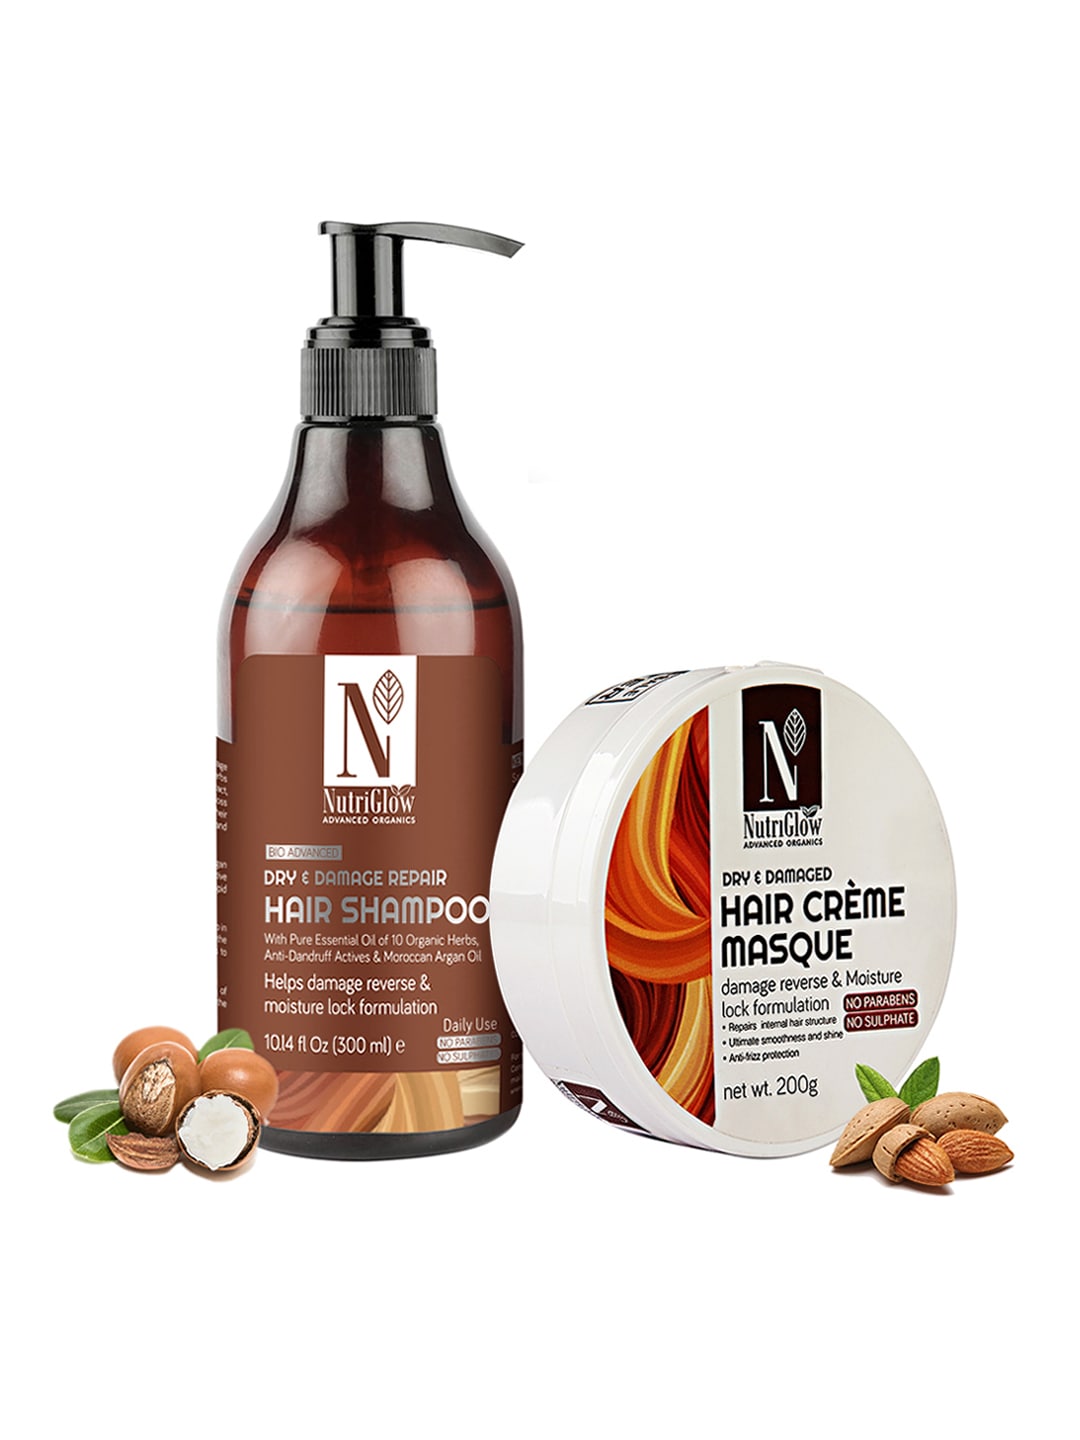 NutriGlow Advanced Organics Set of Dry & Damage Repair Shampoo 300ml & Hair Masque 200g Price in India